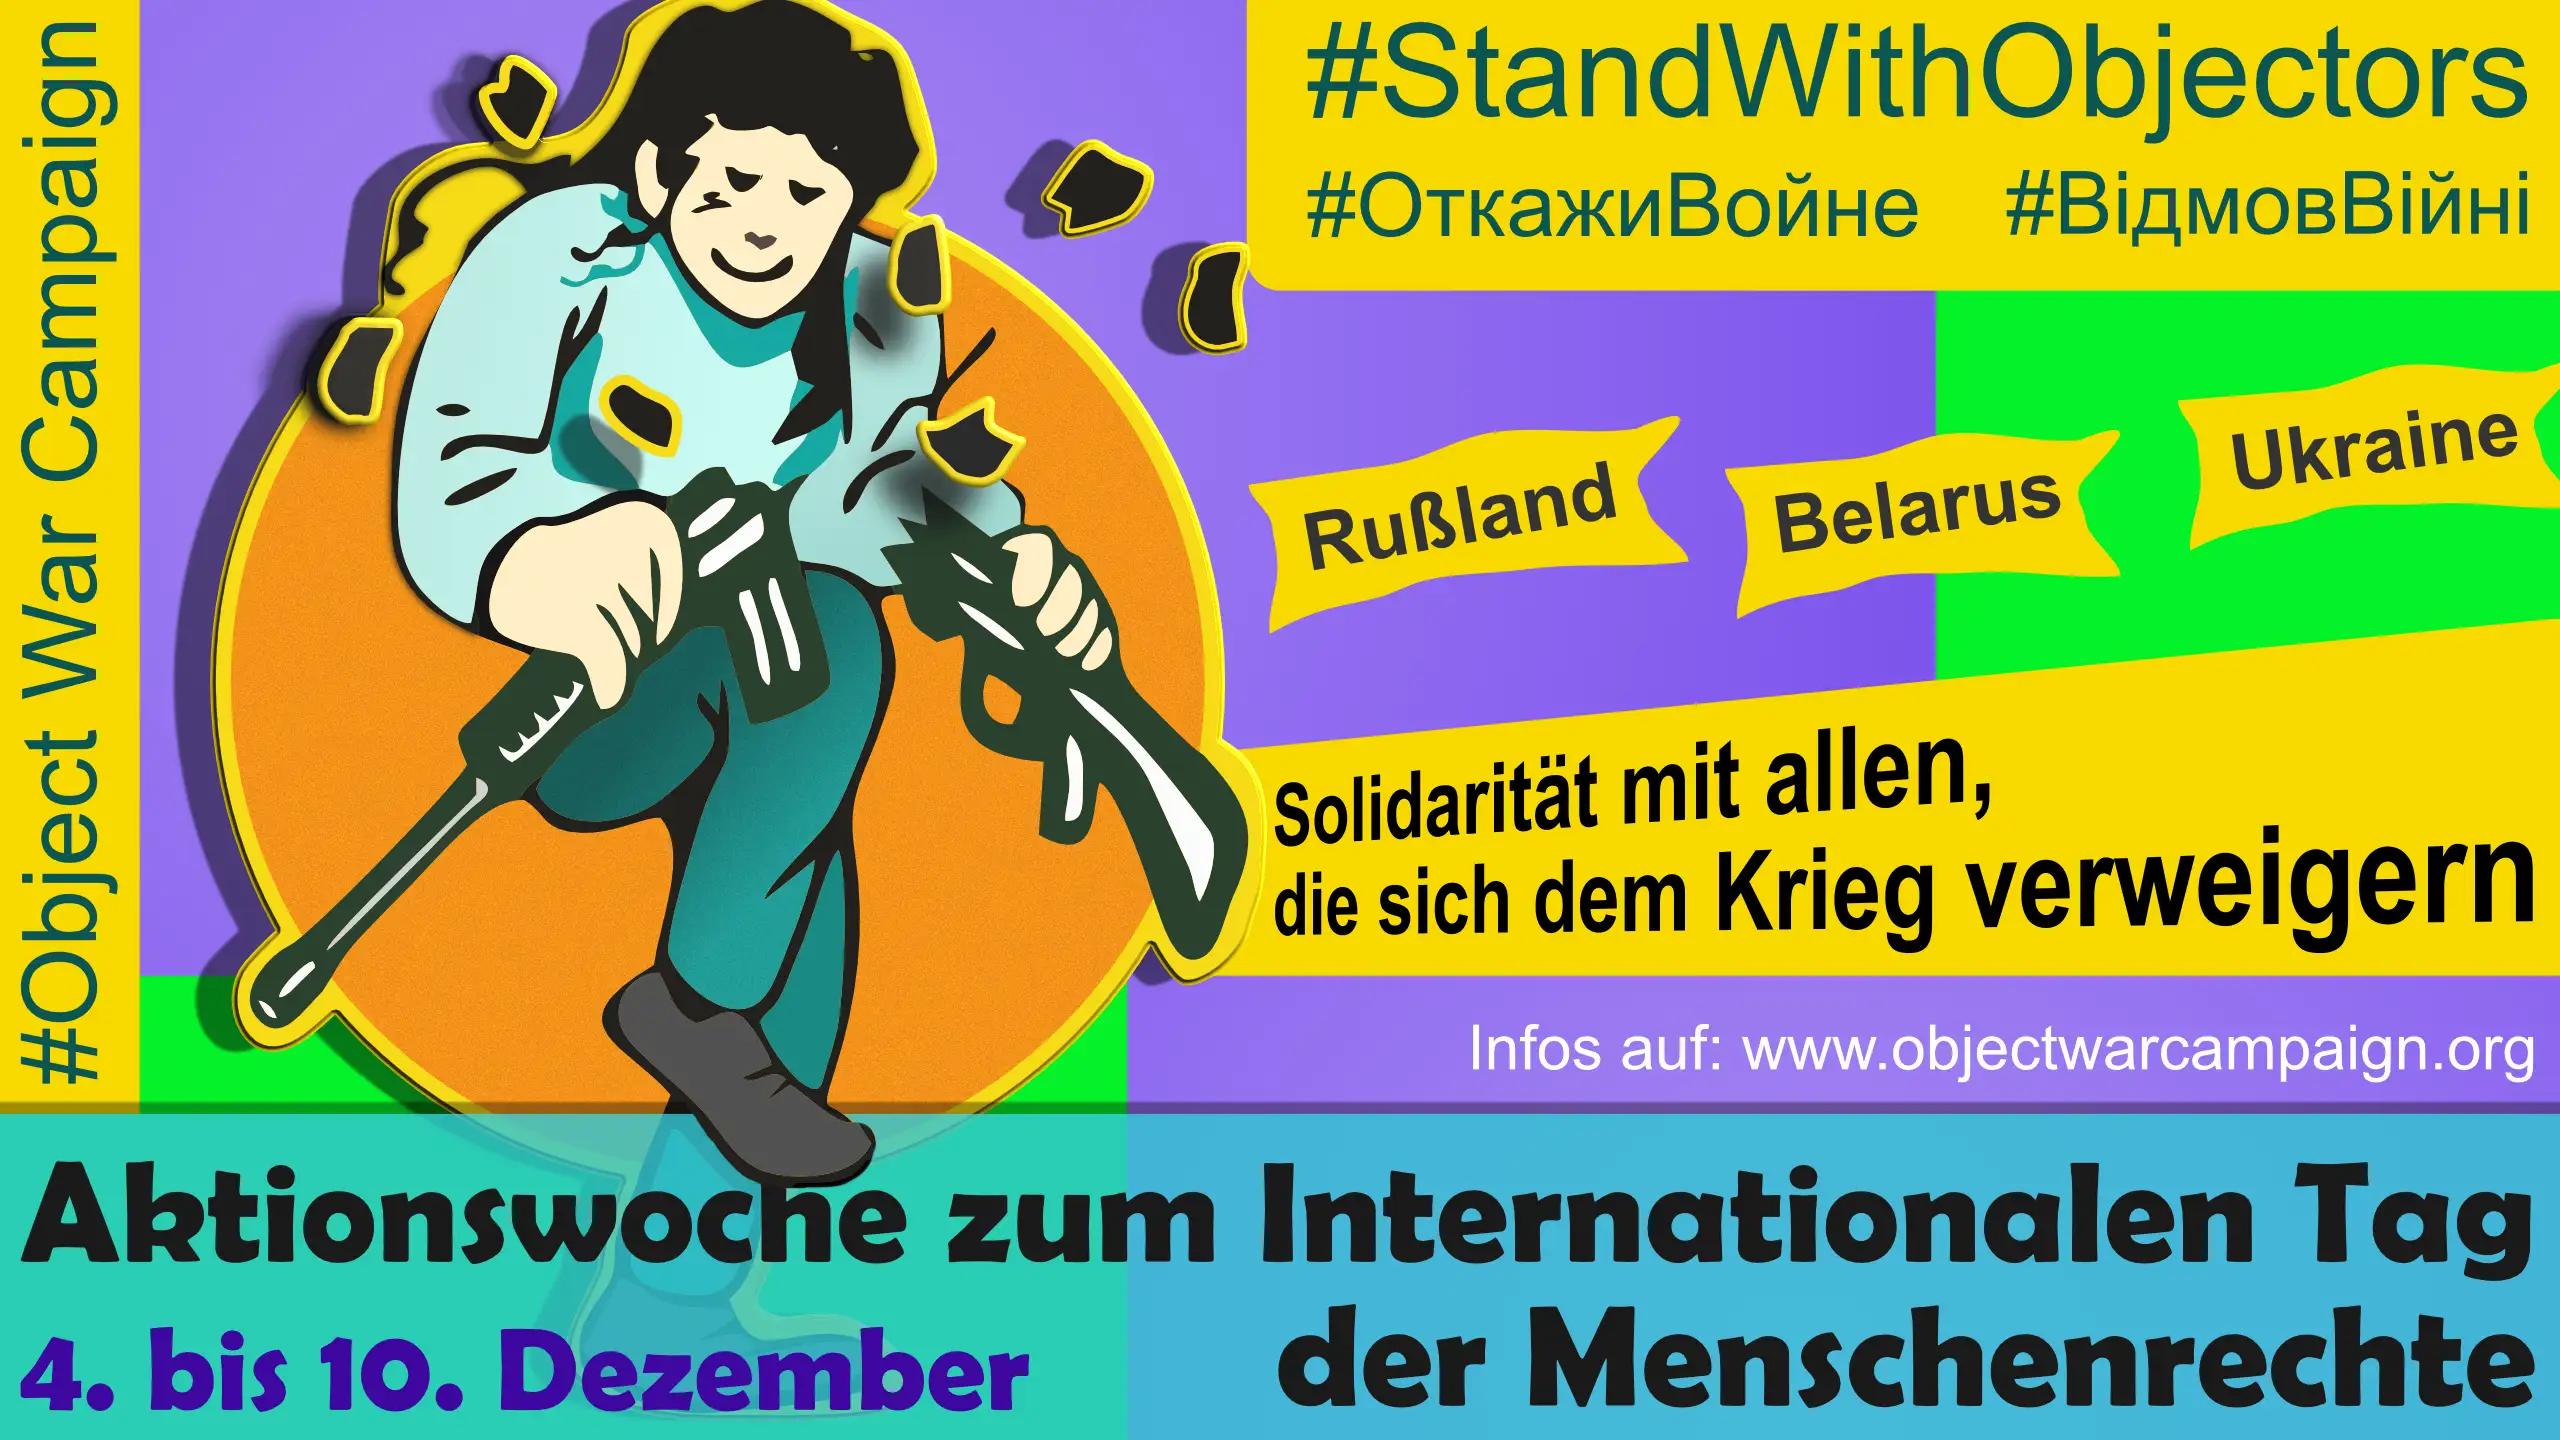 Internationalen Tag der Menschenrechte #ObjectWarCampaign #StandWithObjectors